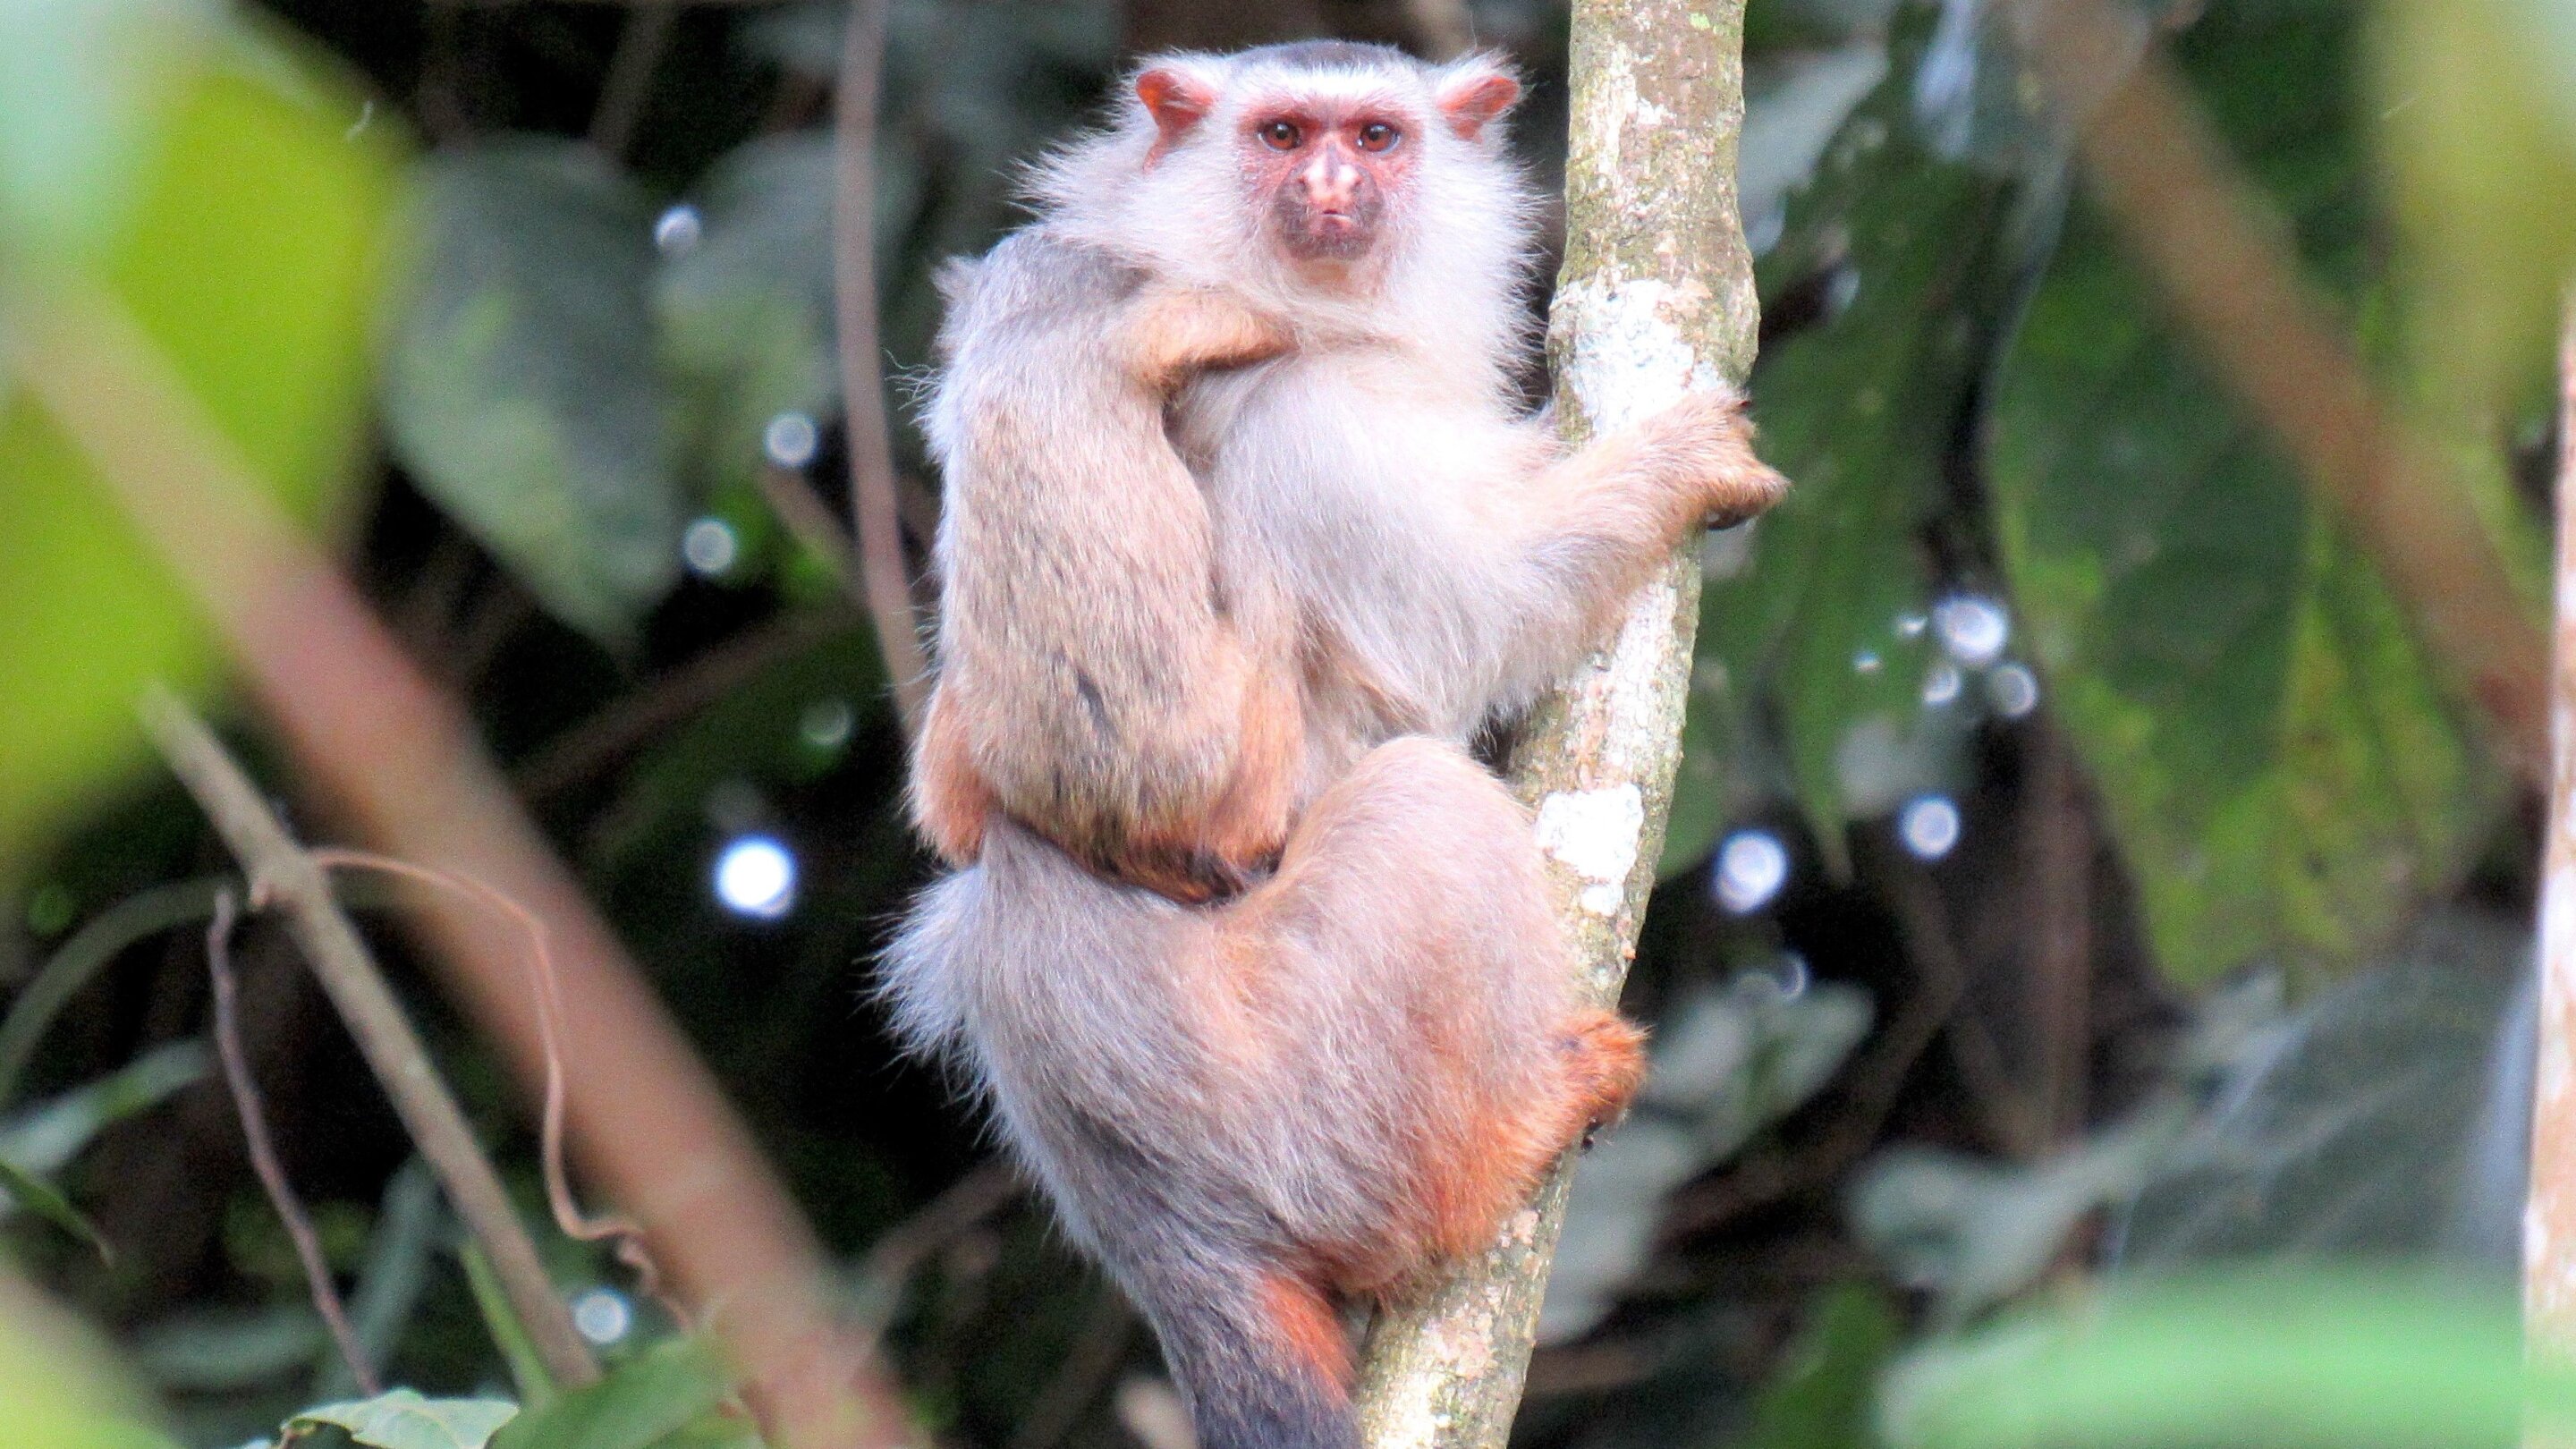 New marmoset species discovered in Brazilian Amazon